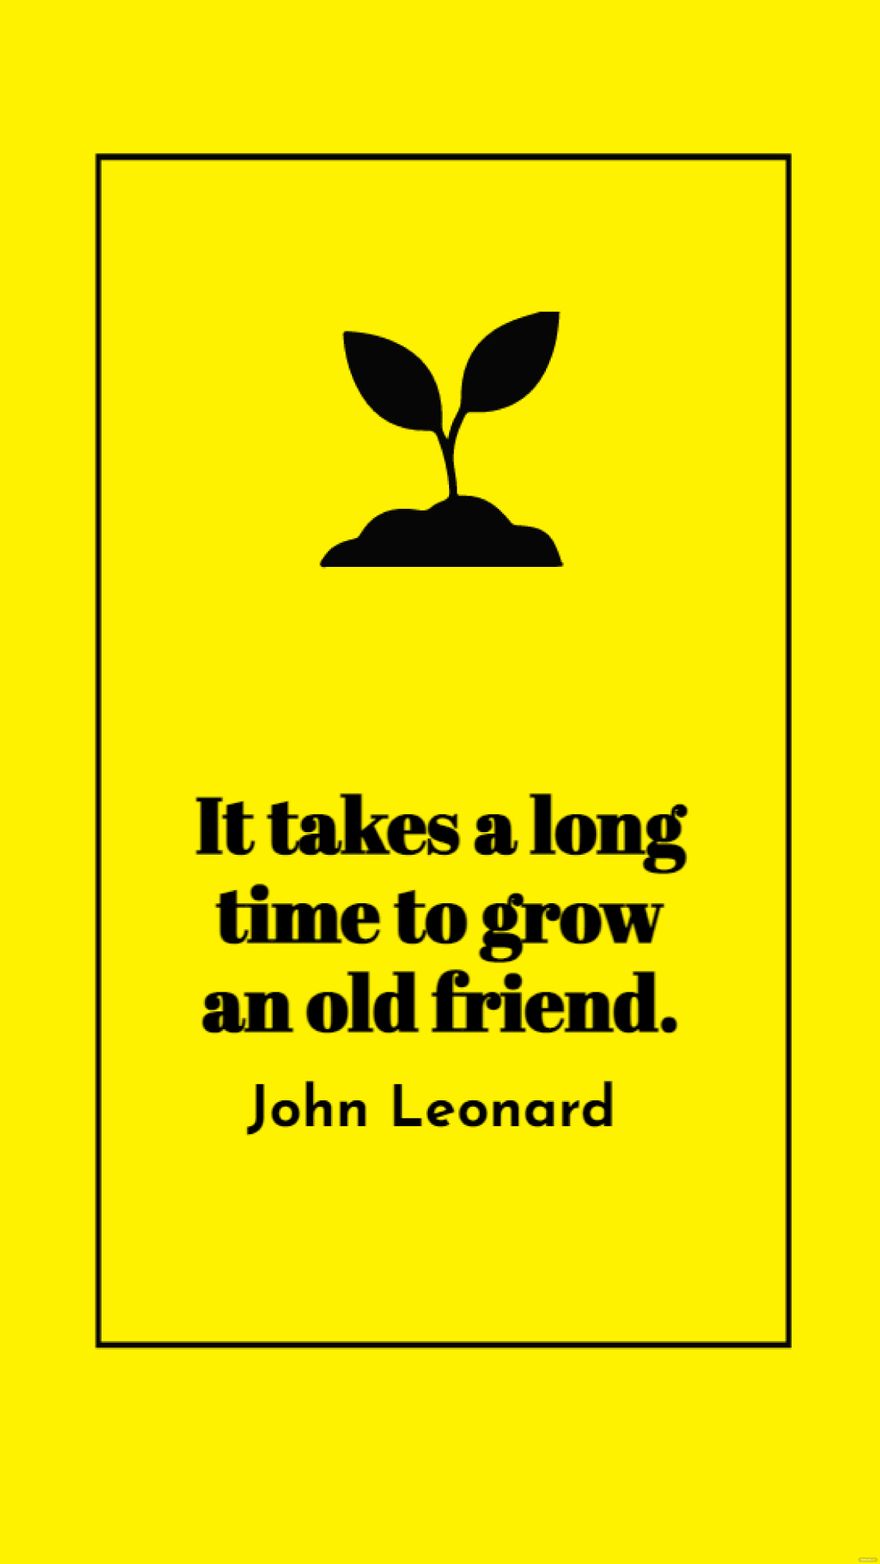 John Leonard - It takes a long time to grow an old friend.